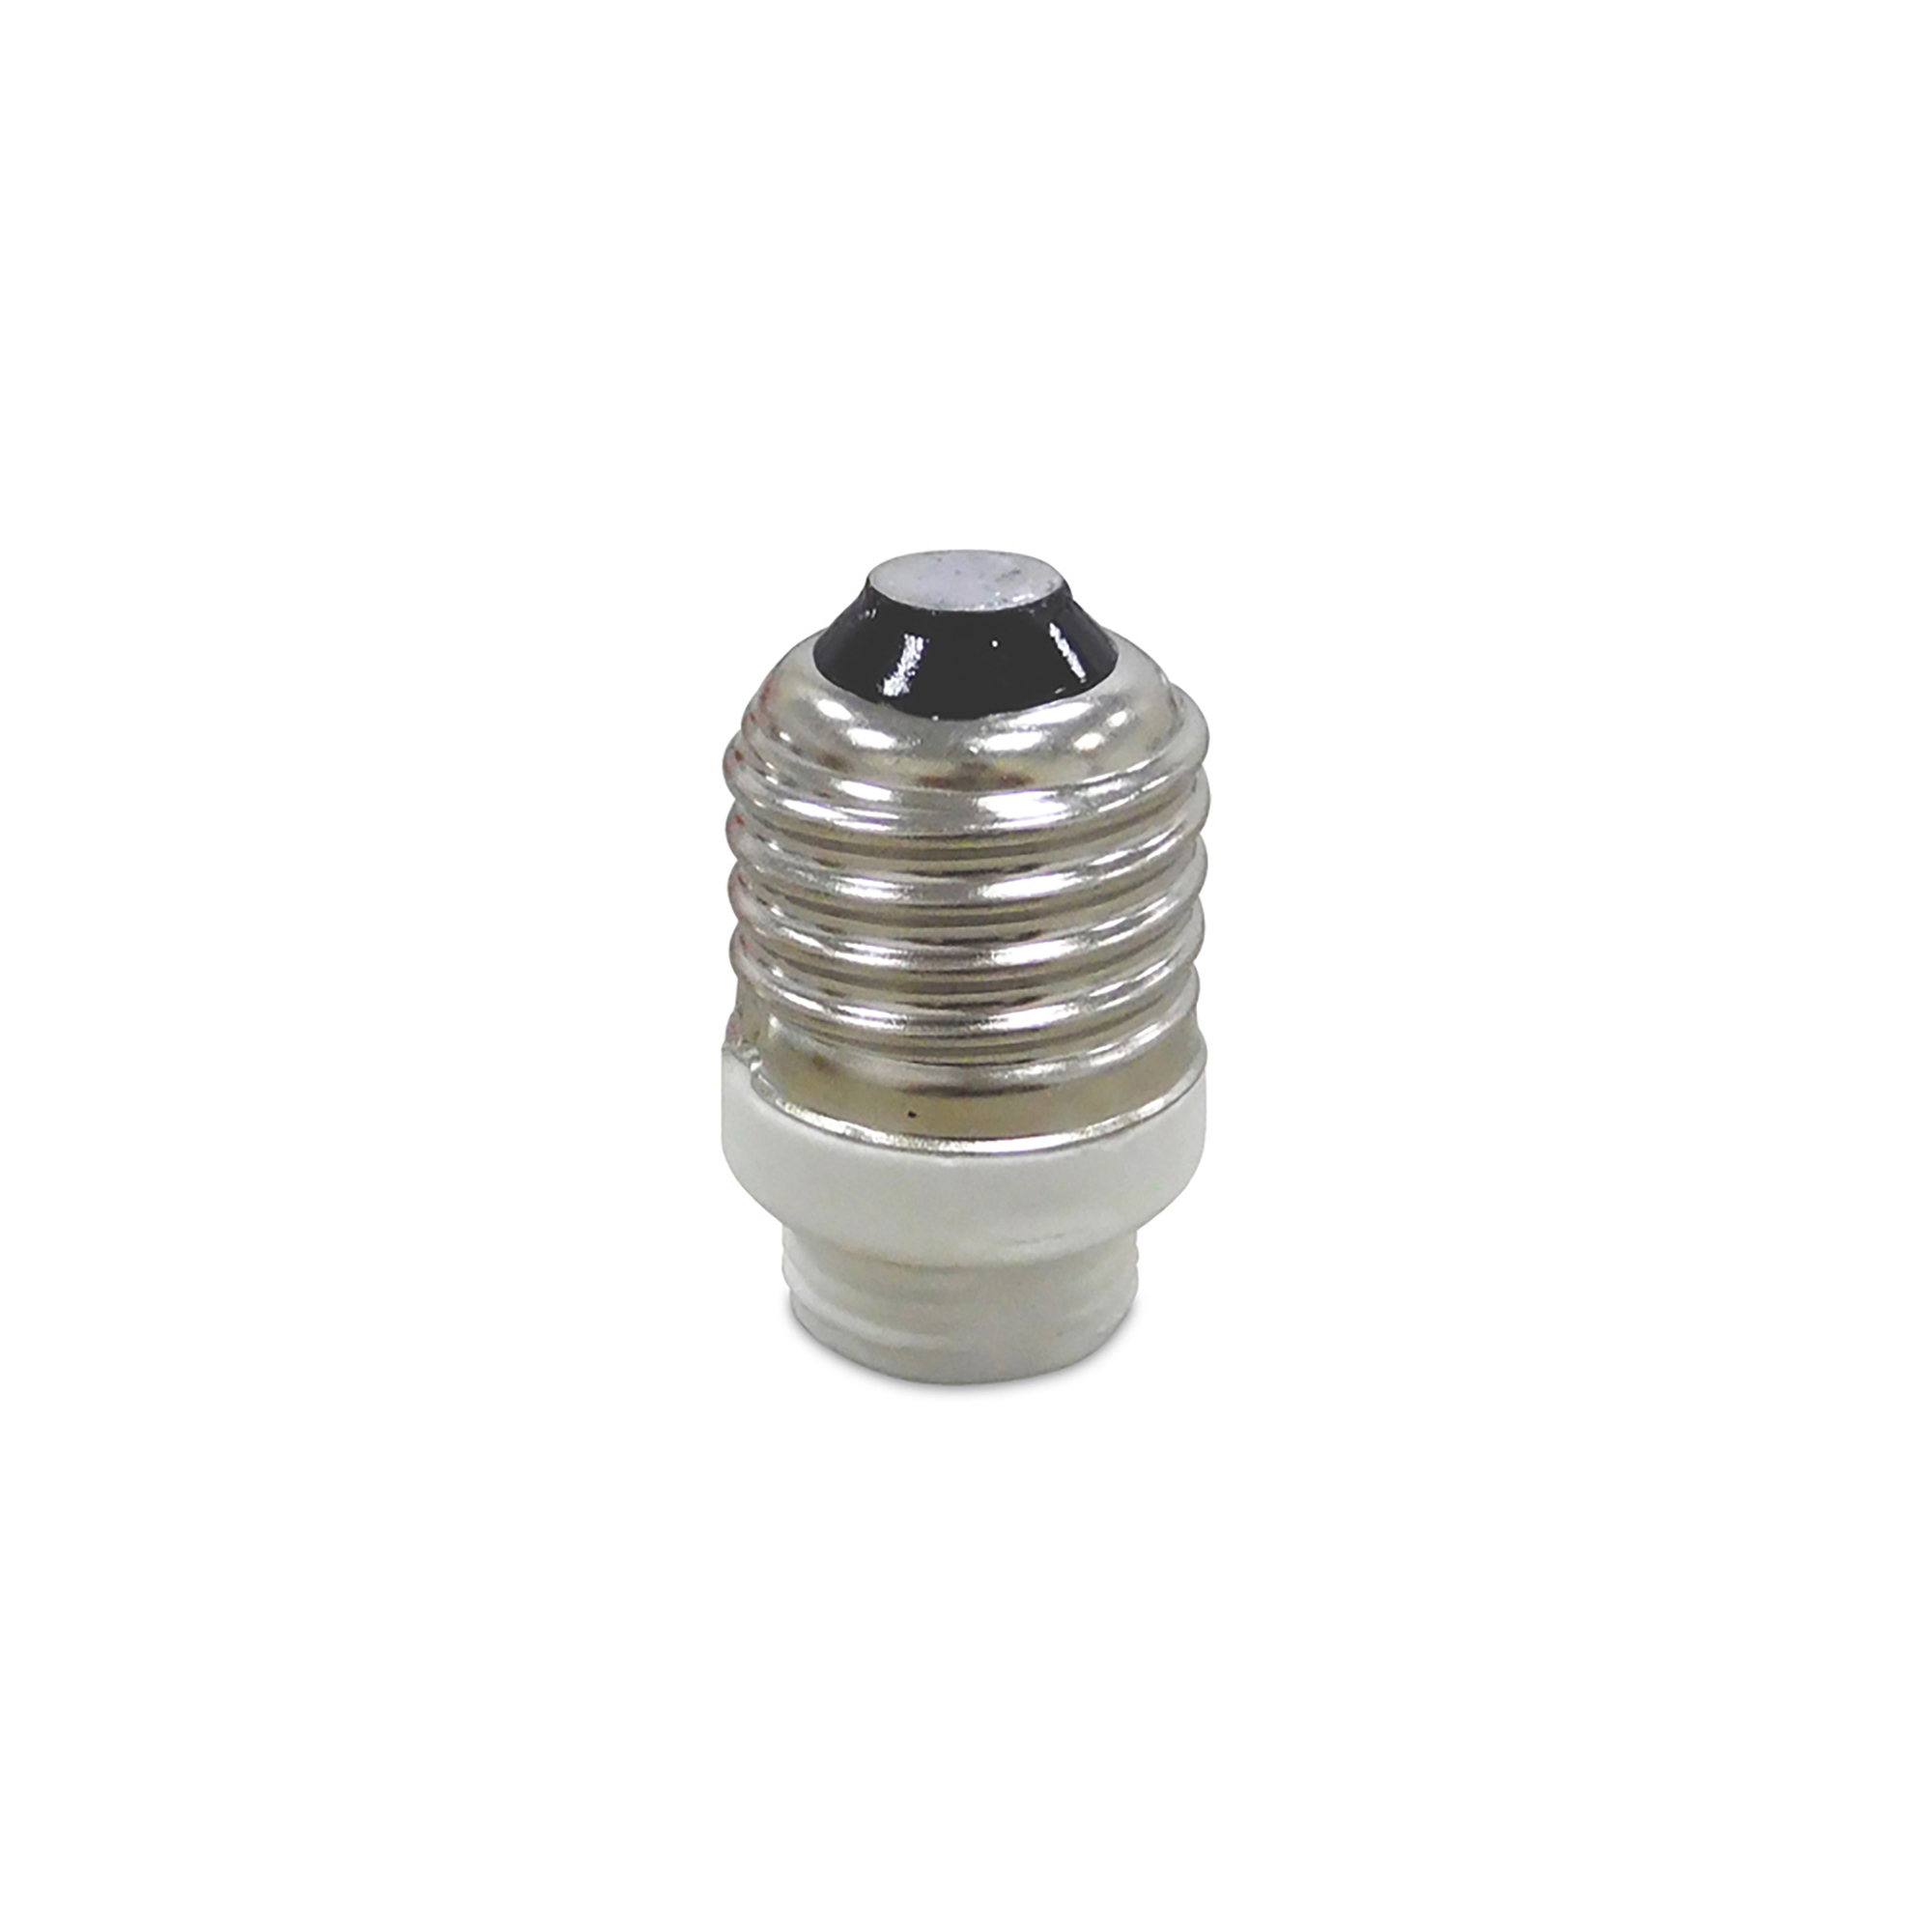 D0219  Elements E27 to G9 Lamp Socket Converter White